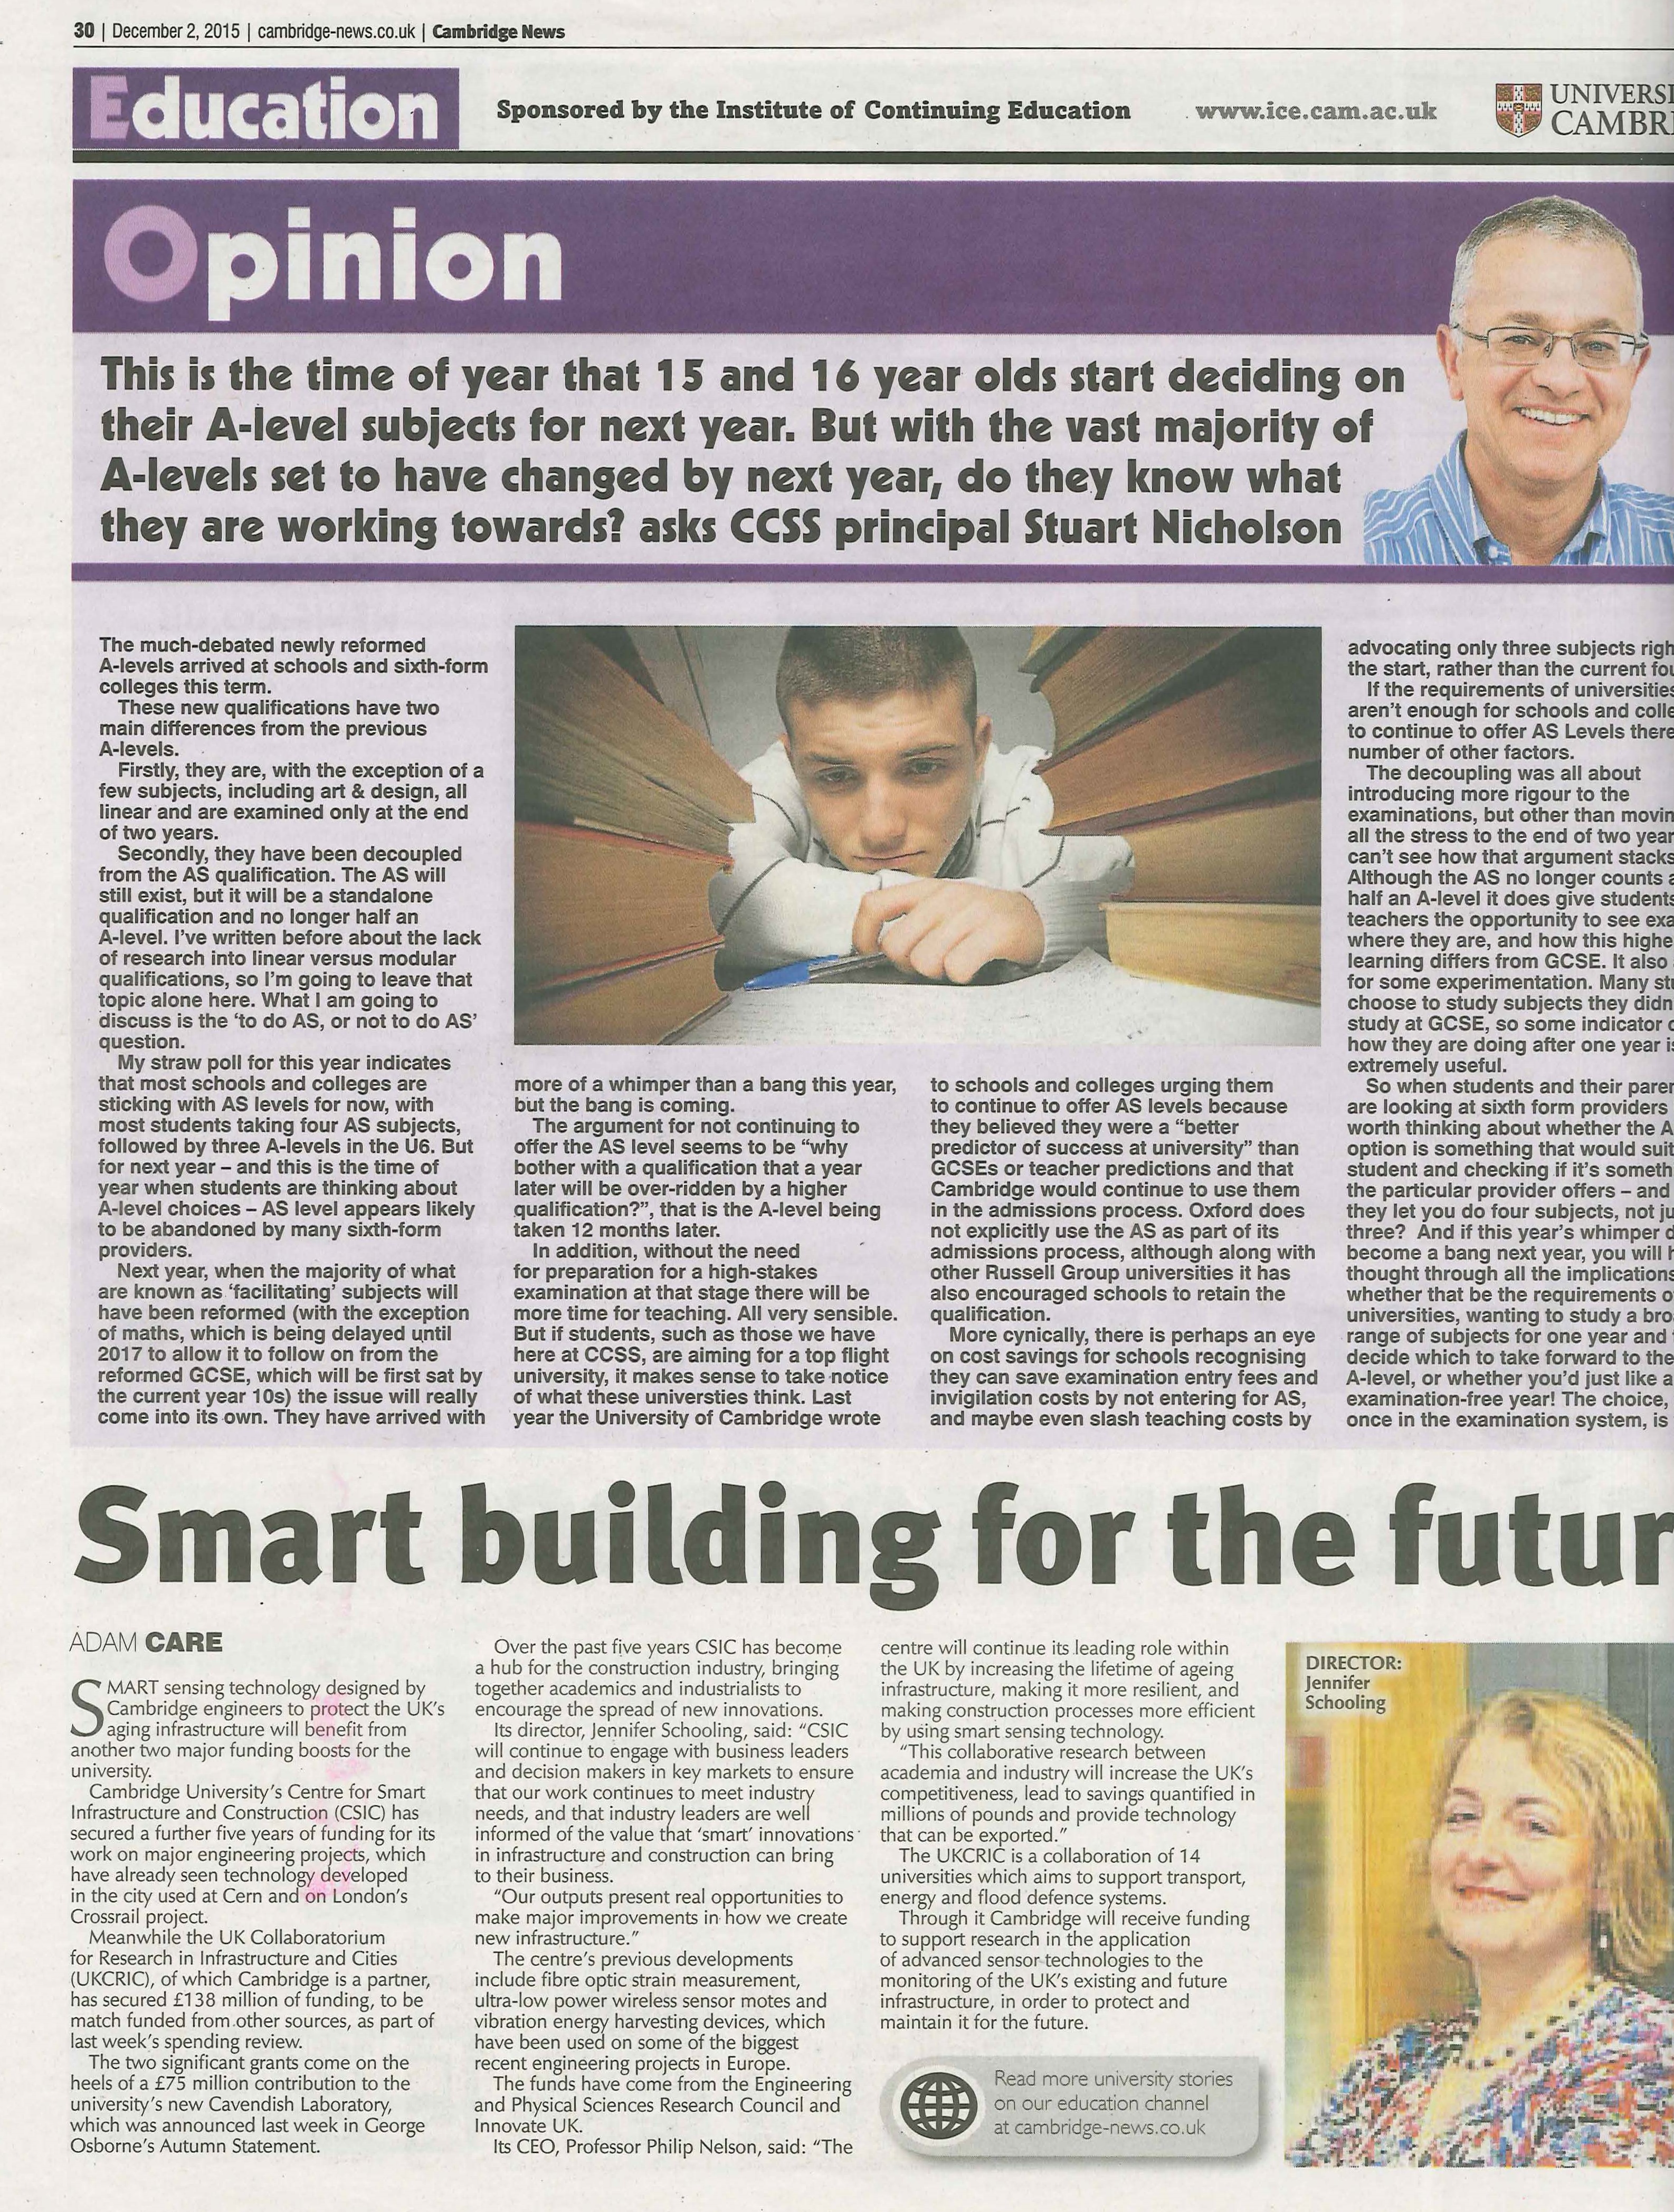 Smart building Jennifer Schooling article in Cambridge News